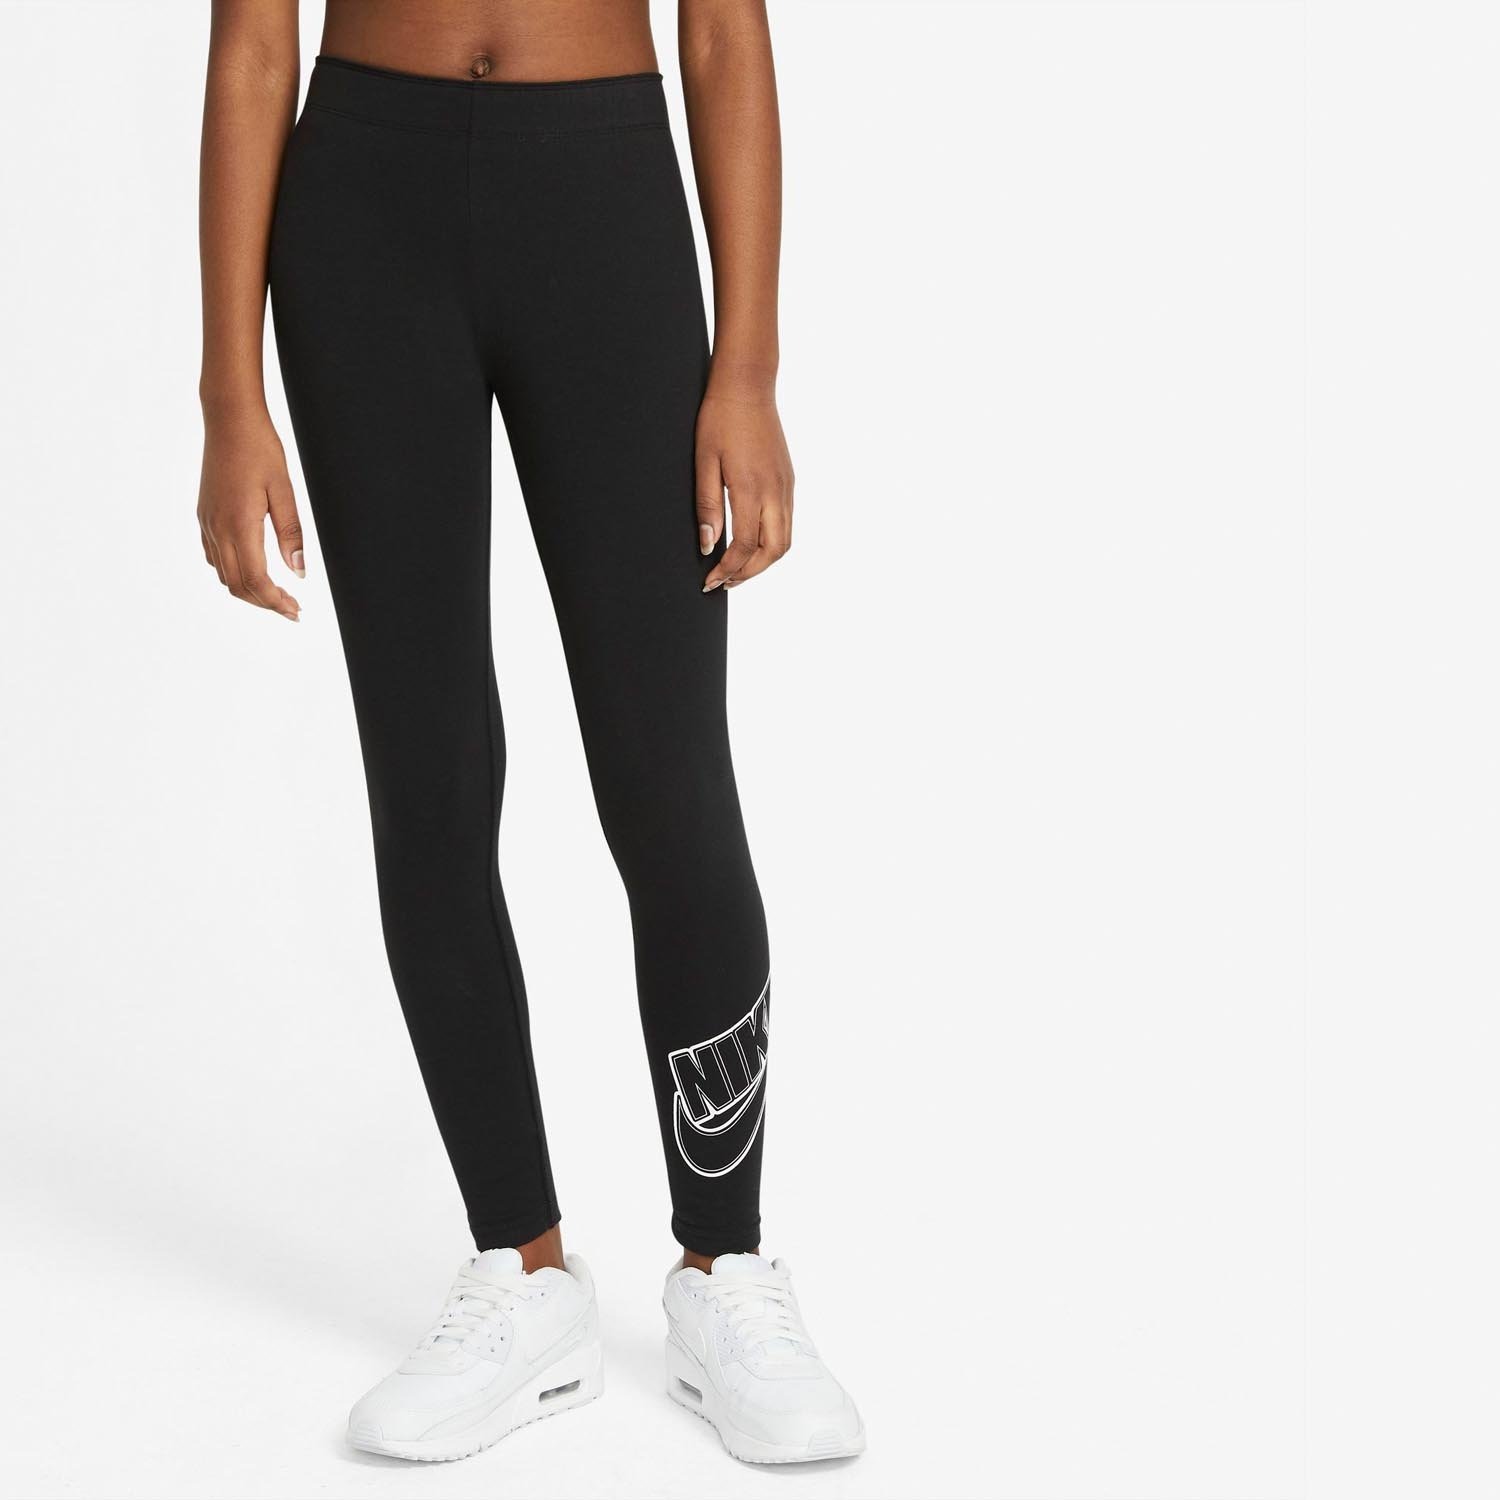 Nike Nike legging zwart/wit kinderen kinderen